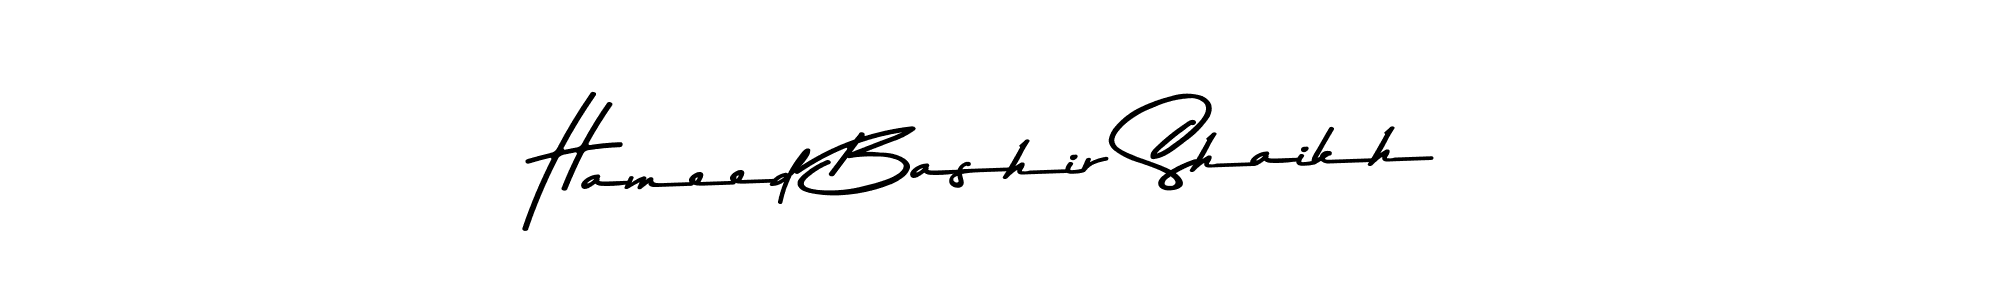 Hameed Bashir Shaikh stylish signature style. Best Handwritten Sign (Asem Kandis PERSONAL USE) for my name. Handwritten Signature Collection Ideas for my name Hameed Bashir Shaikh. Hameed Bashir Shaikh signature style 9 images and pictures png